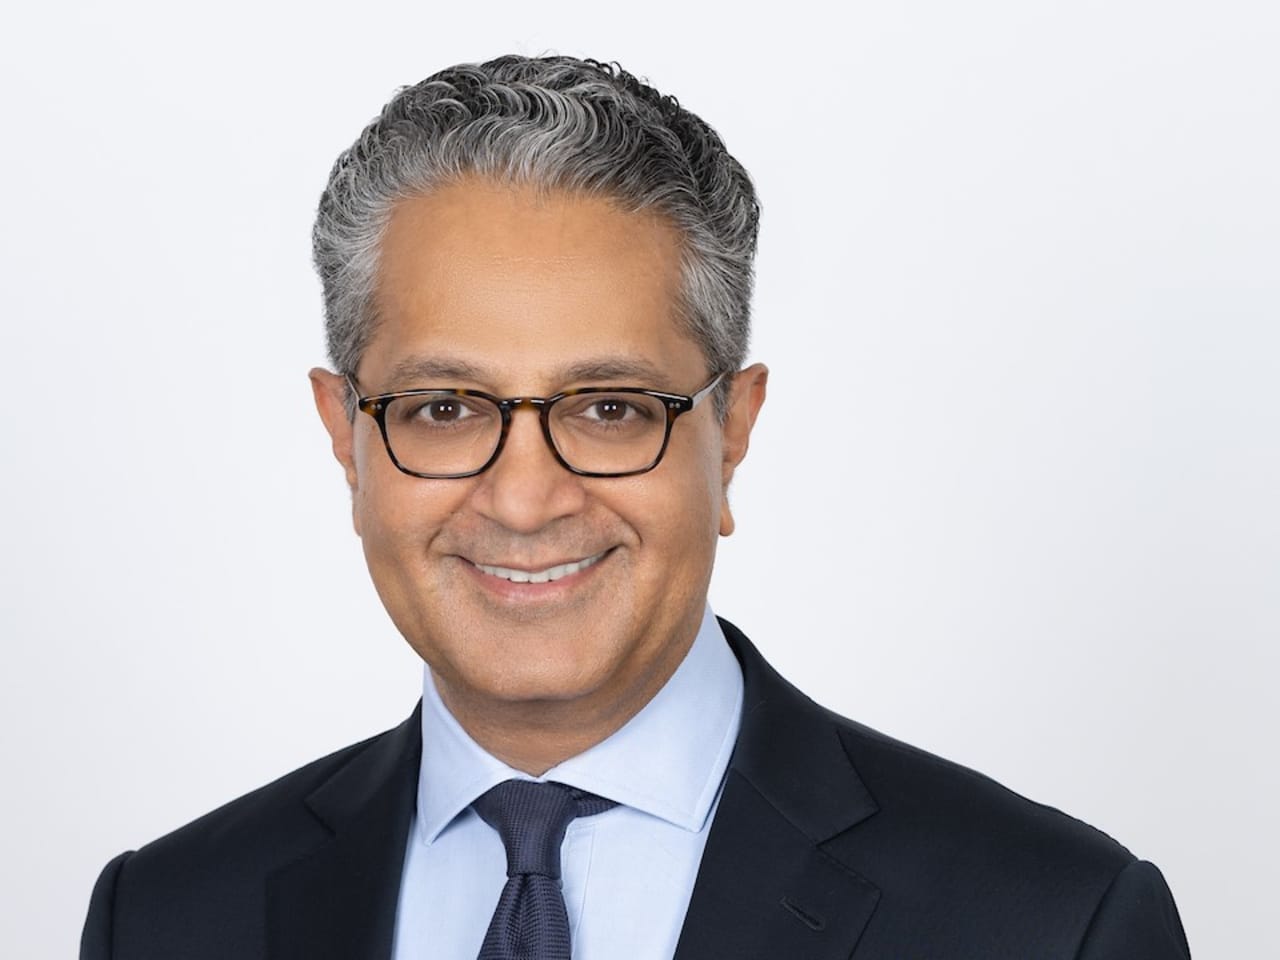 Who is Salim Ramji, the new Vanguard CEO?